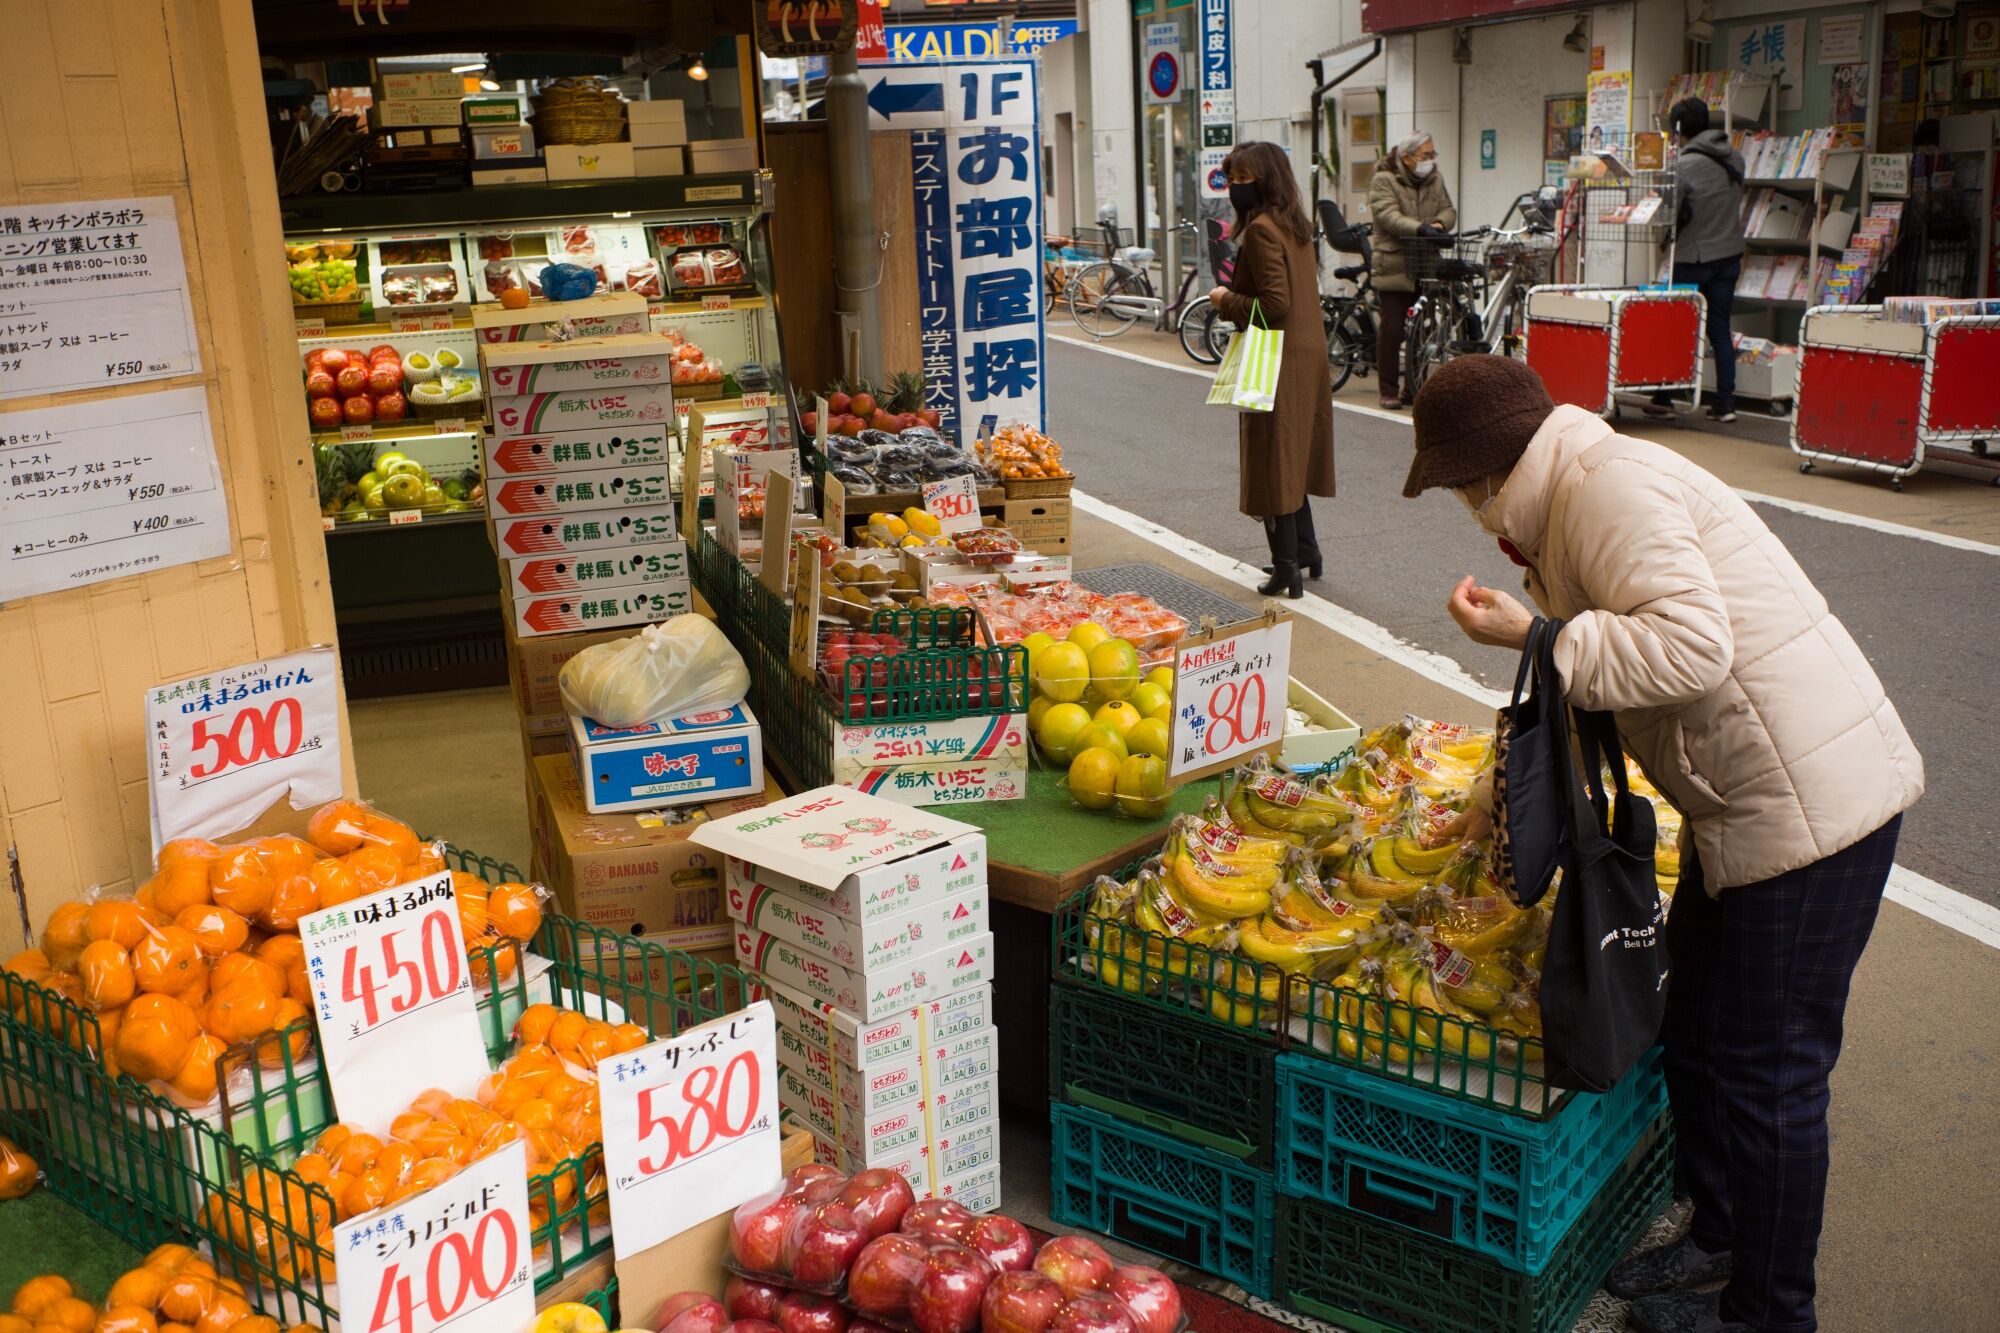 Tokyo Prices Halt 10 Months of Falls Despite Virus Restrictions - Bloomberg